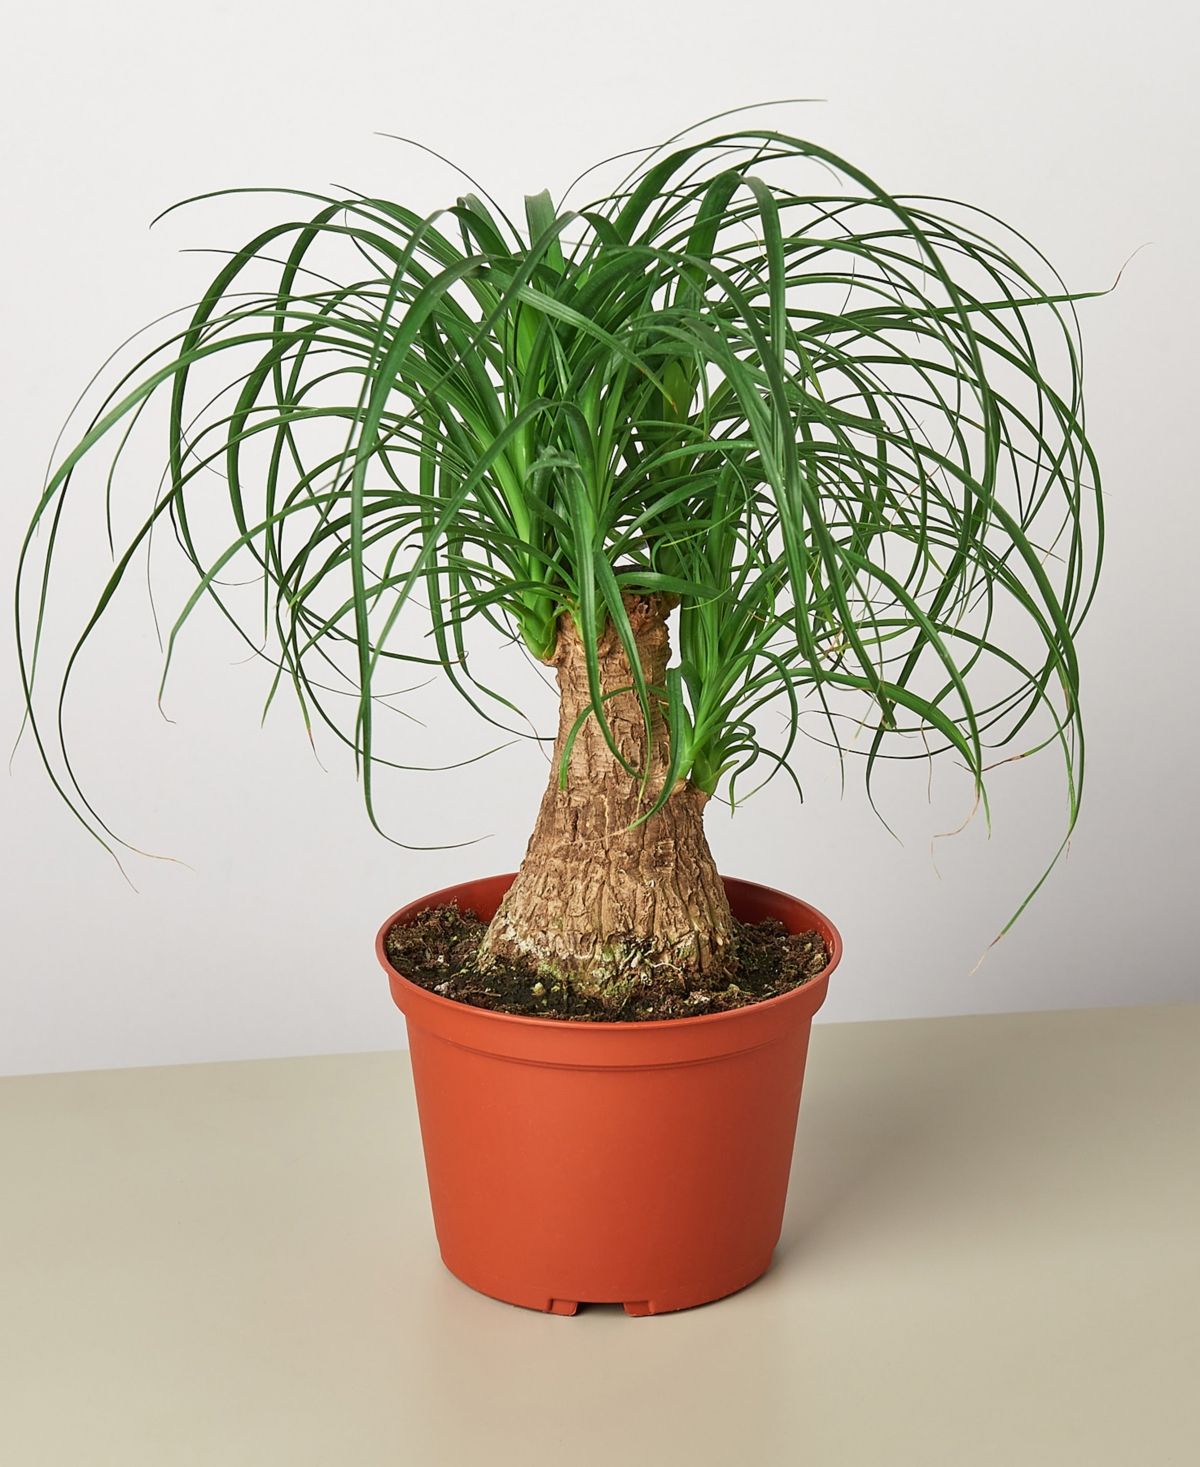 Palm 'Ponytail' Live Plant, 6" Pot | Macys (US)